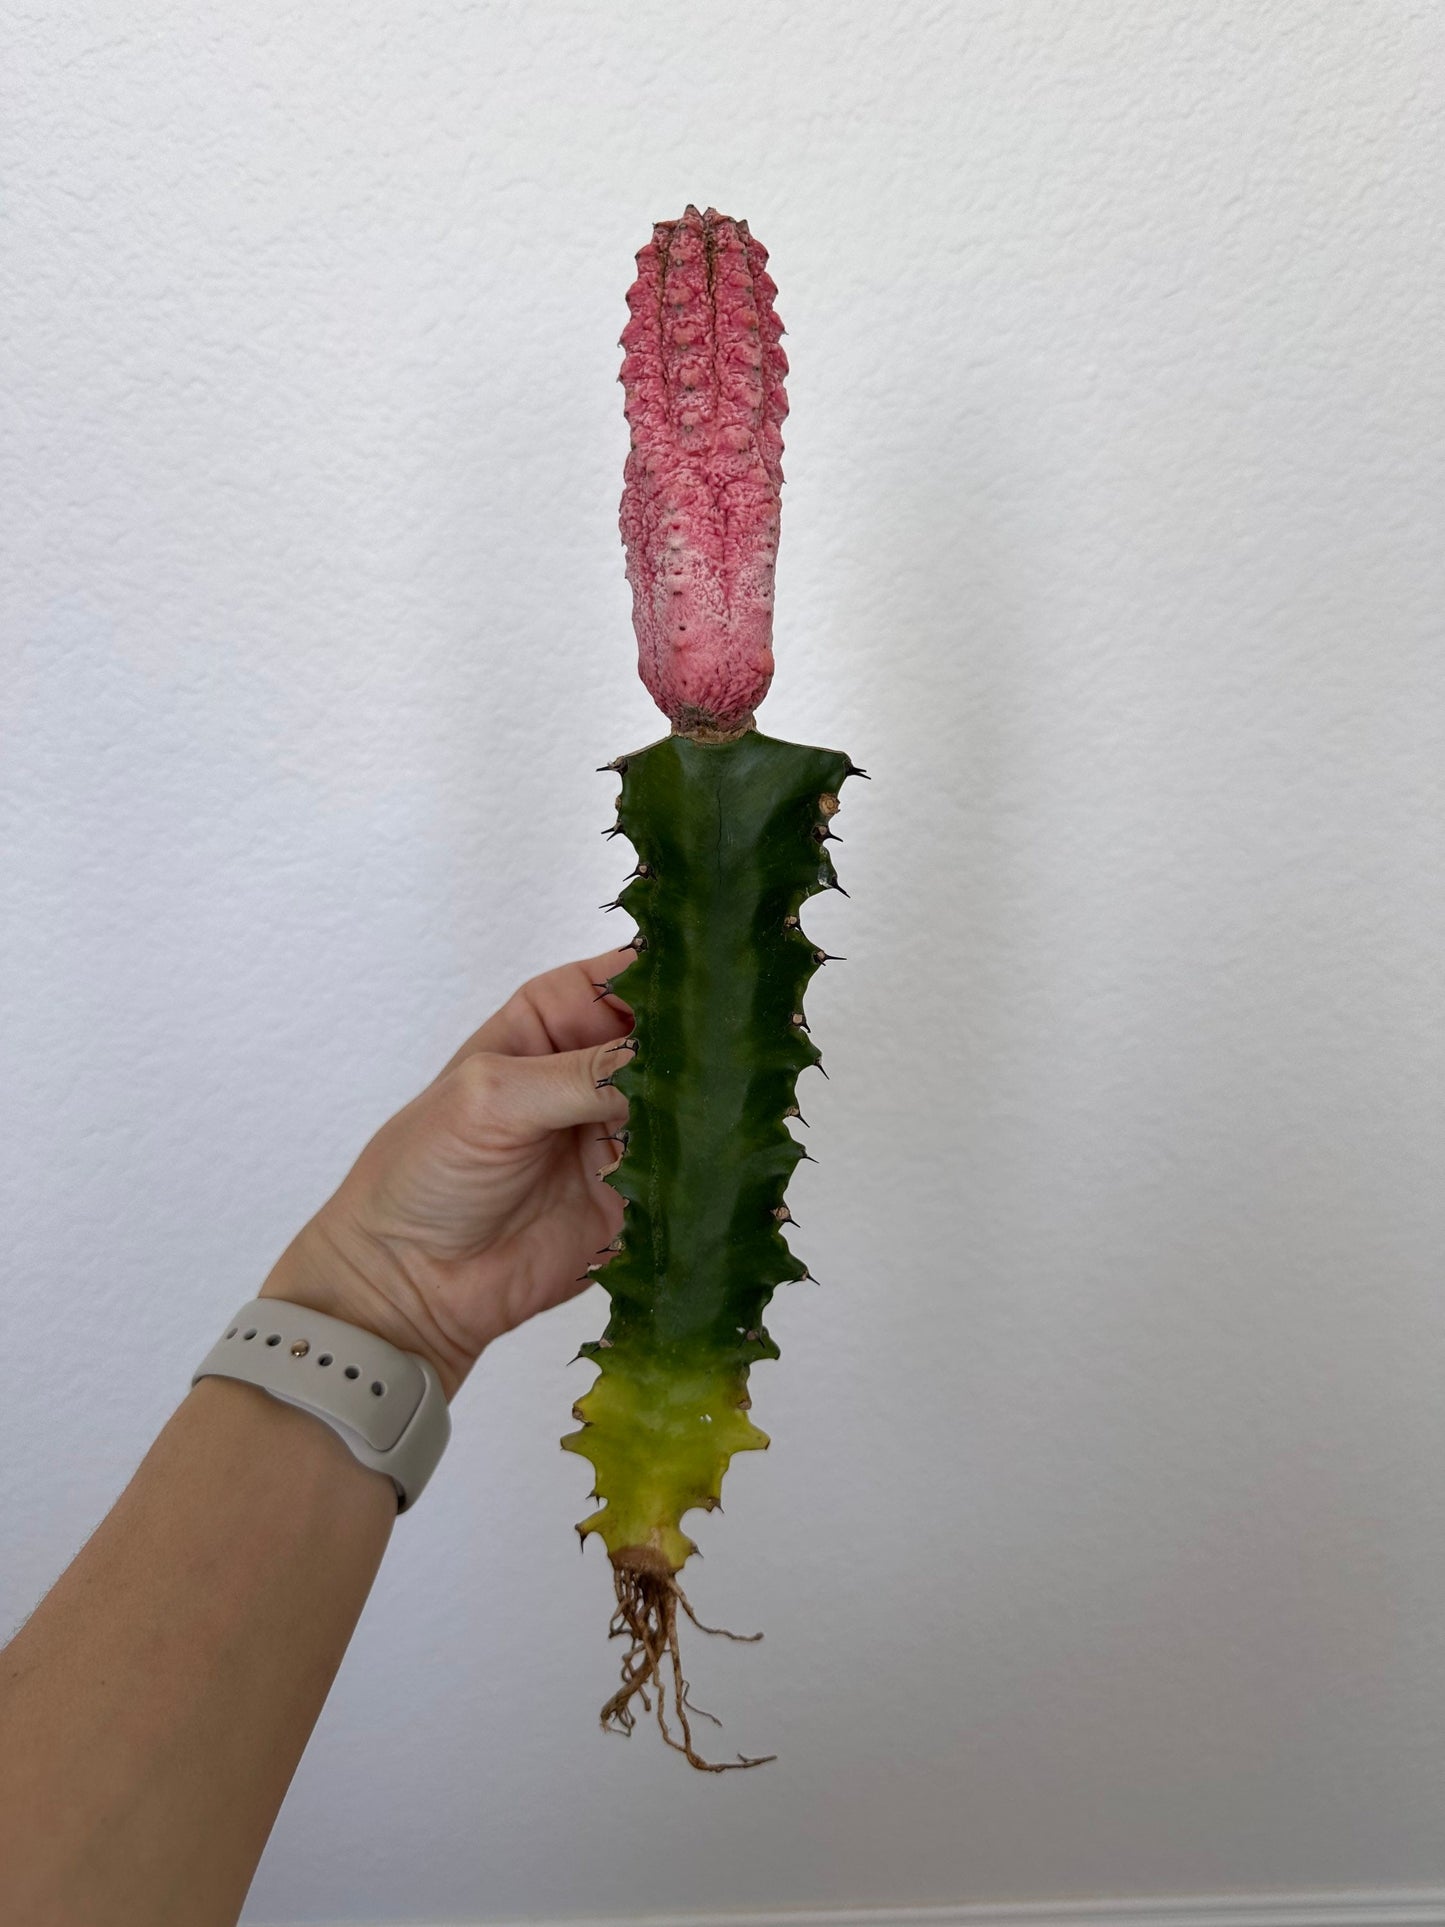 Euphorbia Abdelkuri Damask Pink Cluster or Single Option - Unique Live Cactus - Candelabra-like Succulent